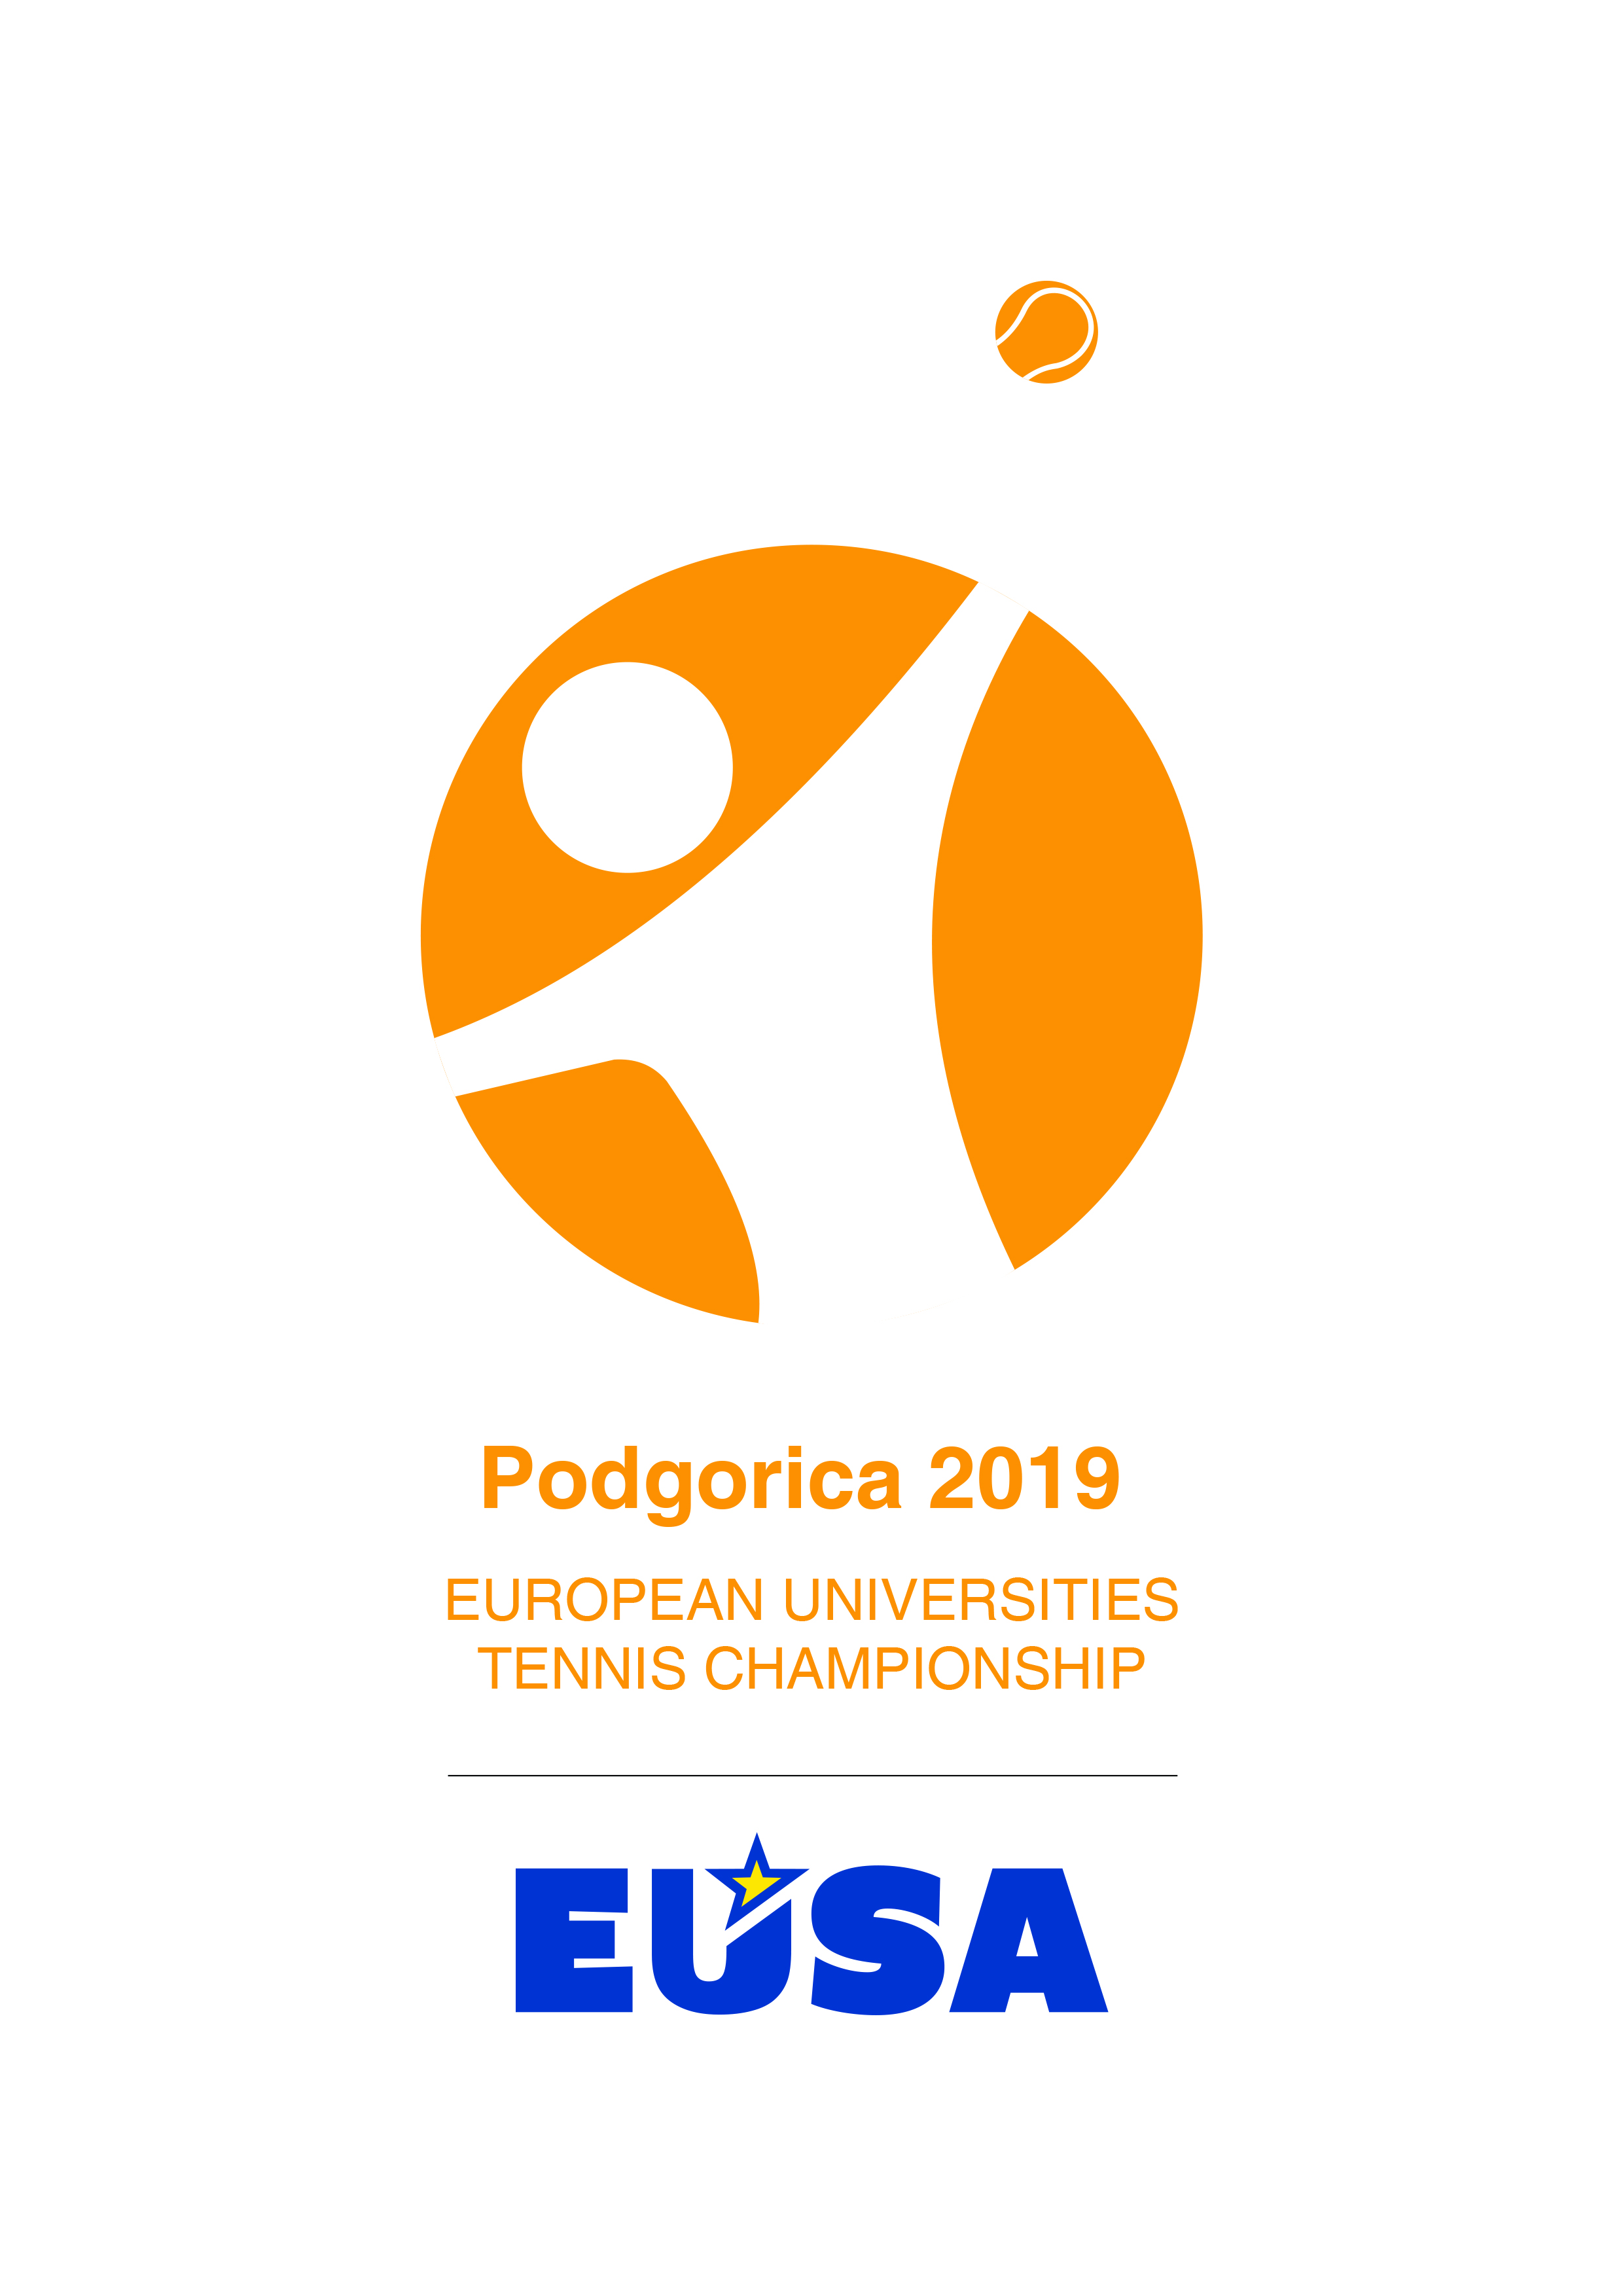 European Universities Tennis Championship Podgorica 2019